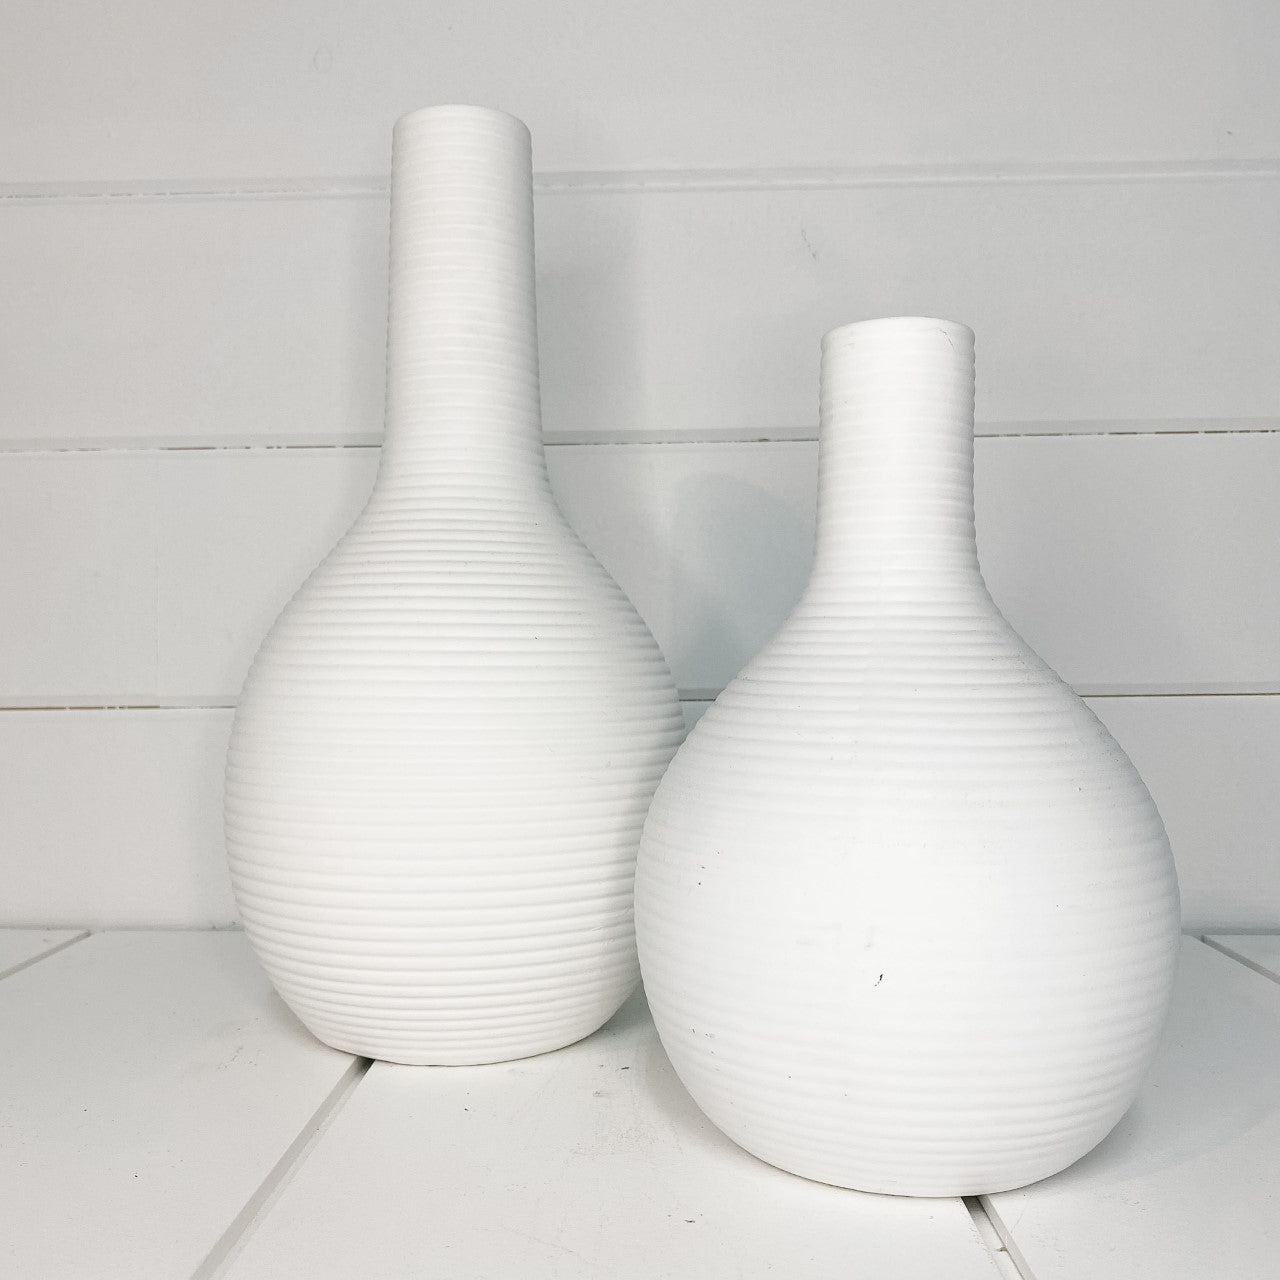 Contemporary decorative vase - two sizes